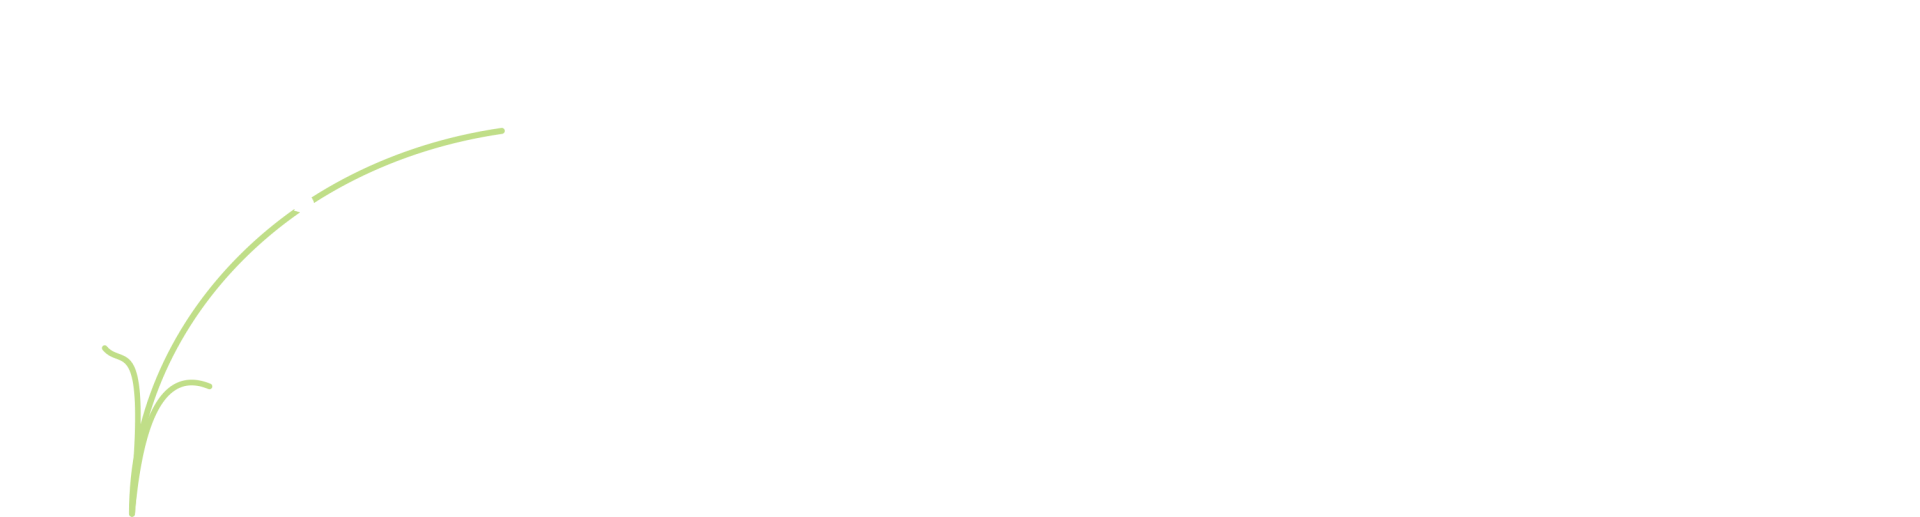 KW Psychological Services